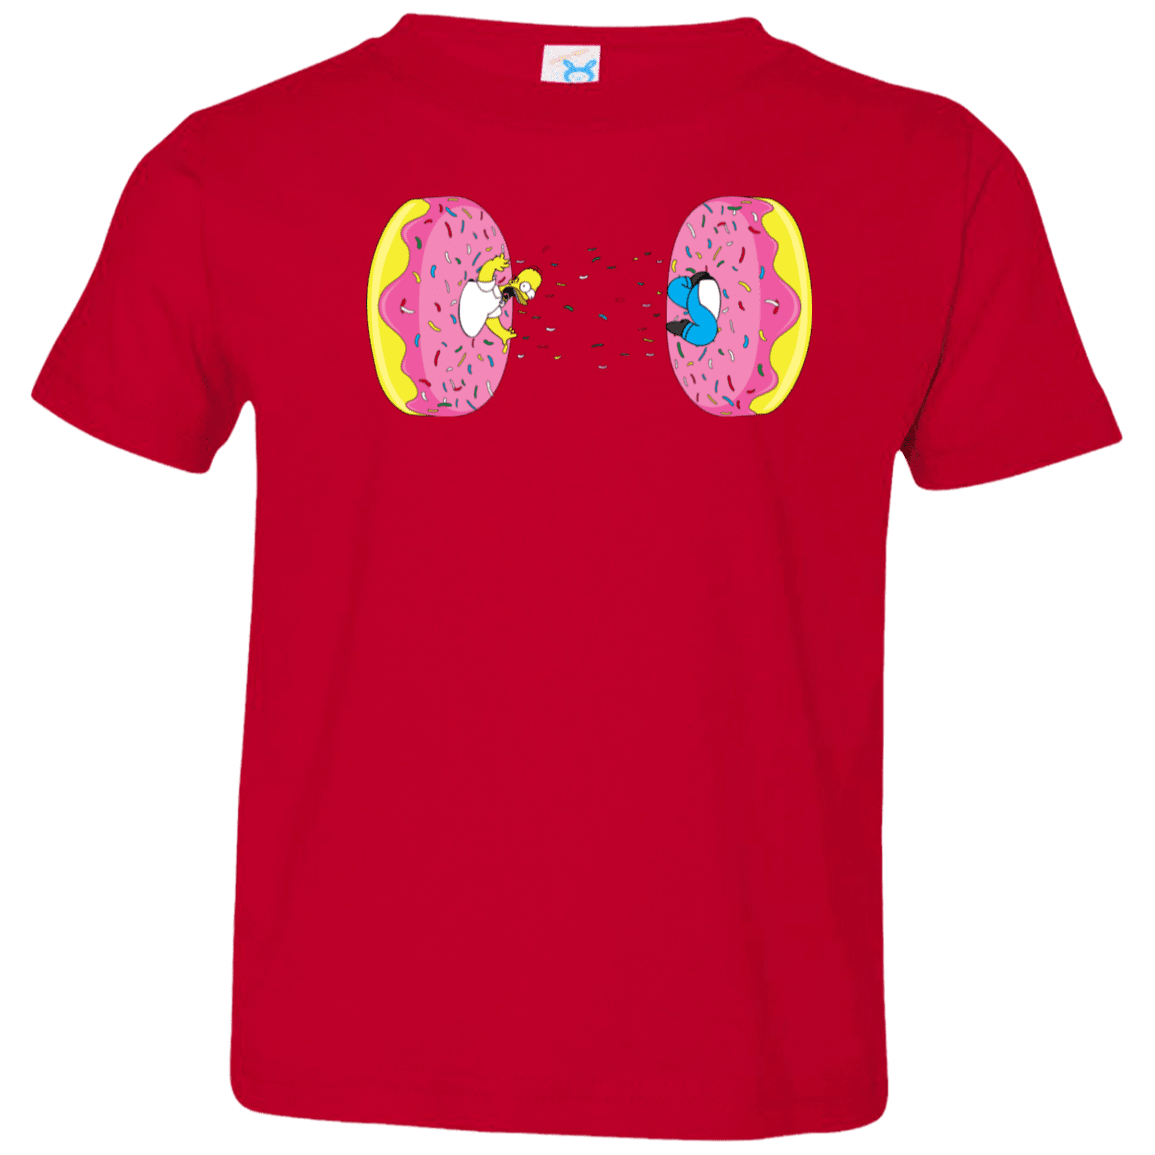 T-Shirts Red / 2T Donut Portal Toddler Premium T-Shirt